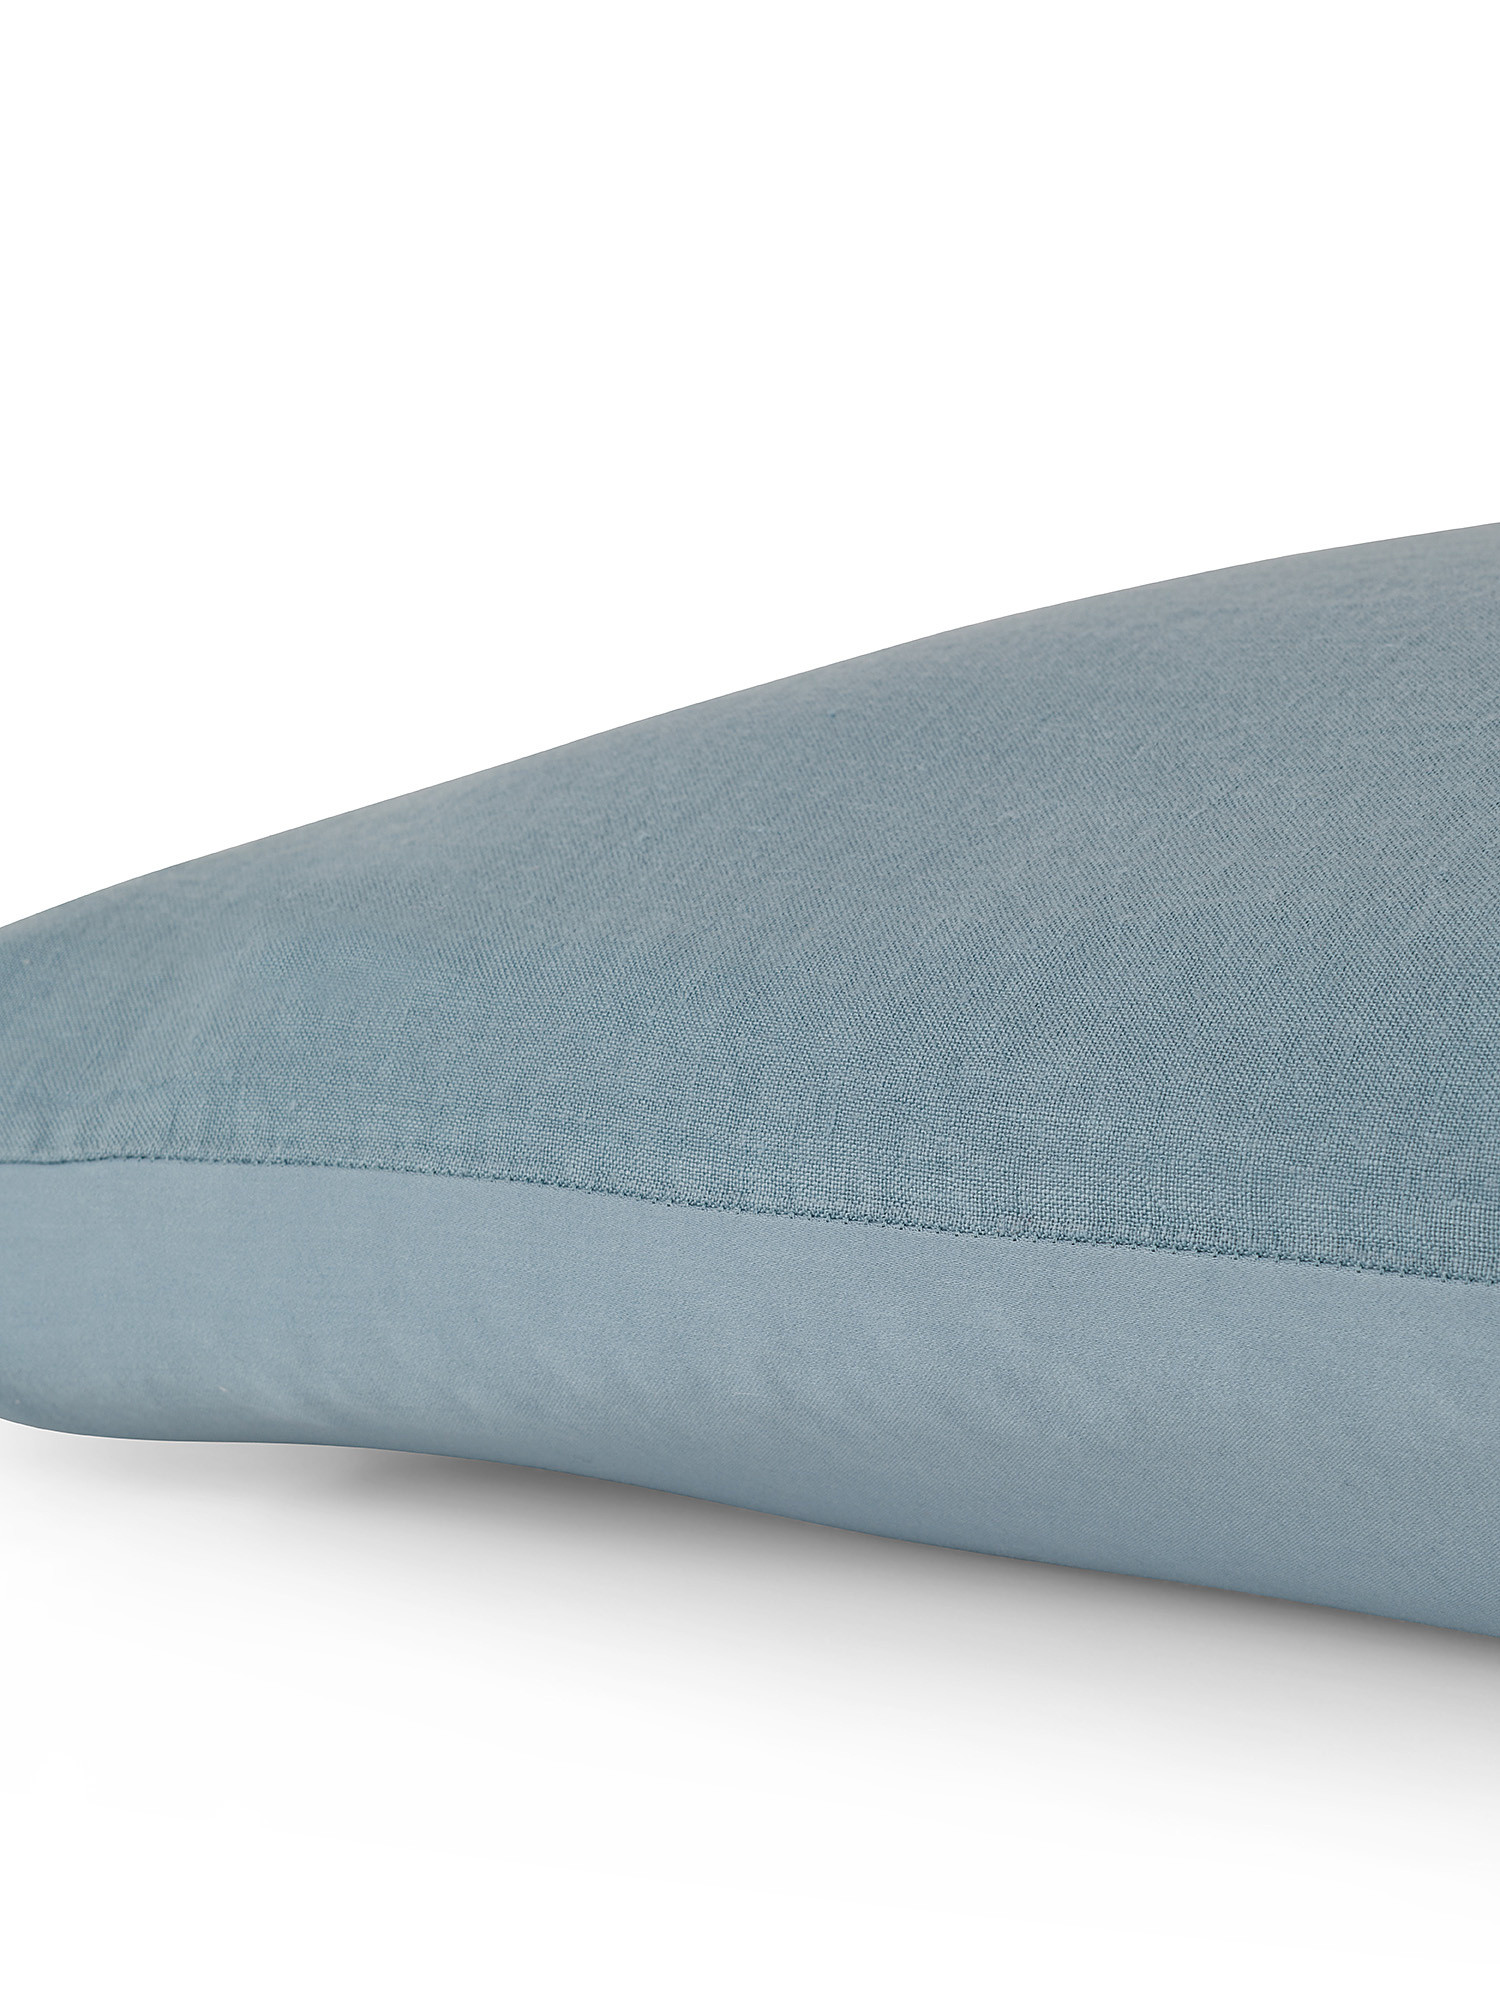 Zefiro plain color linen and cotton pillowcase, Blue, large image number 1